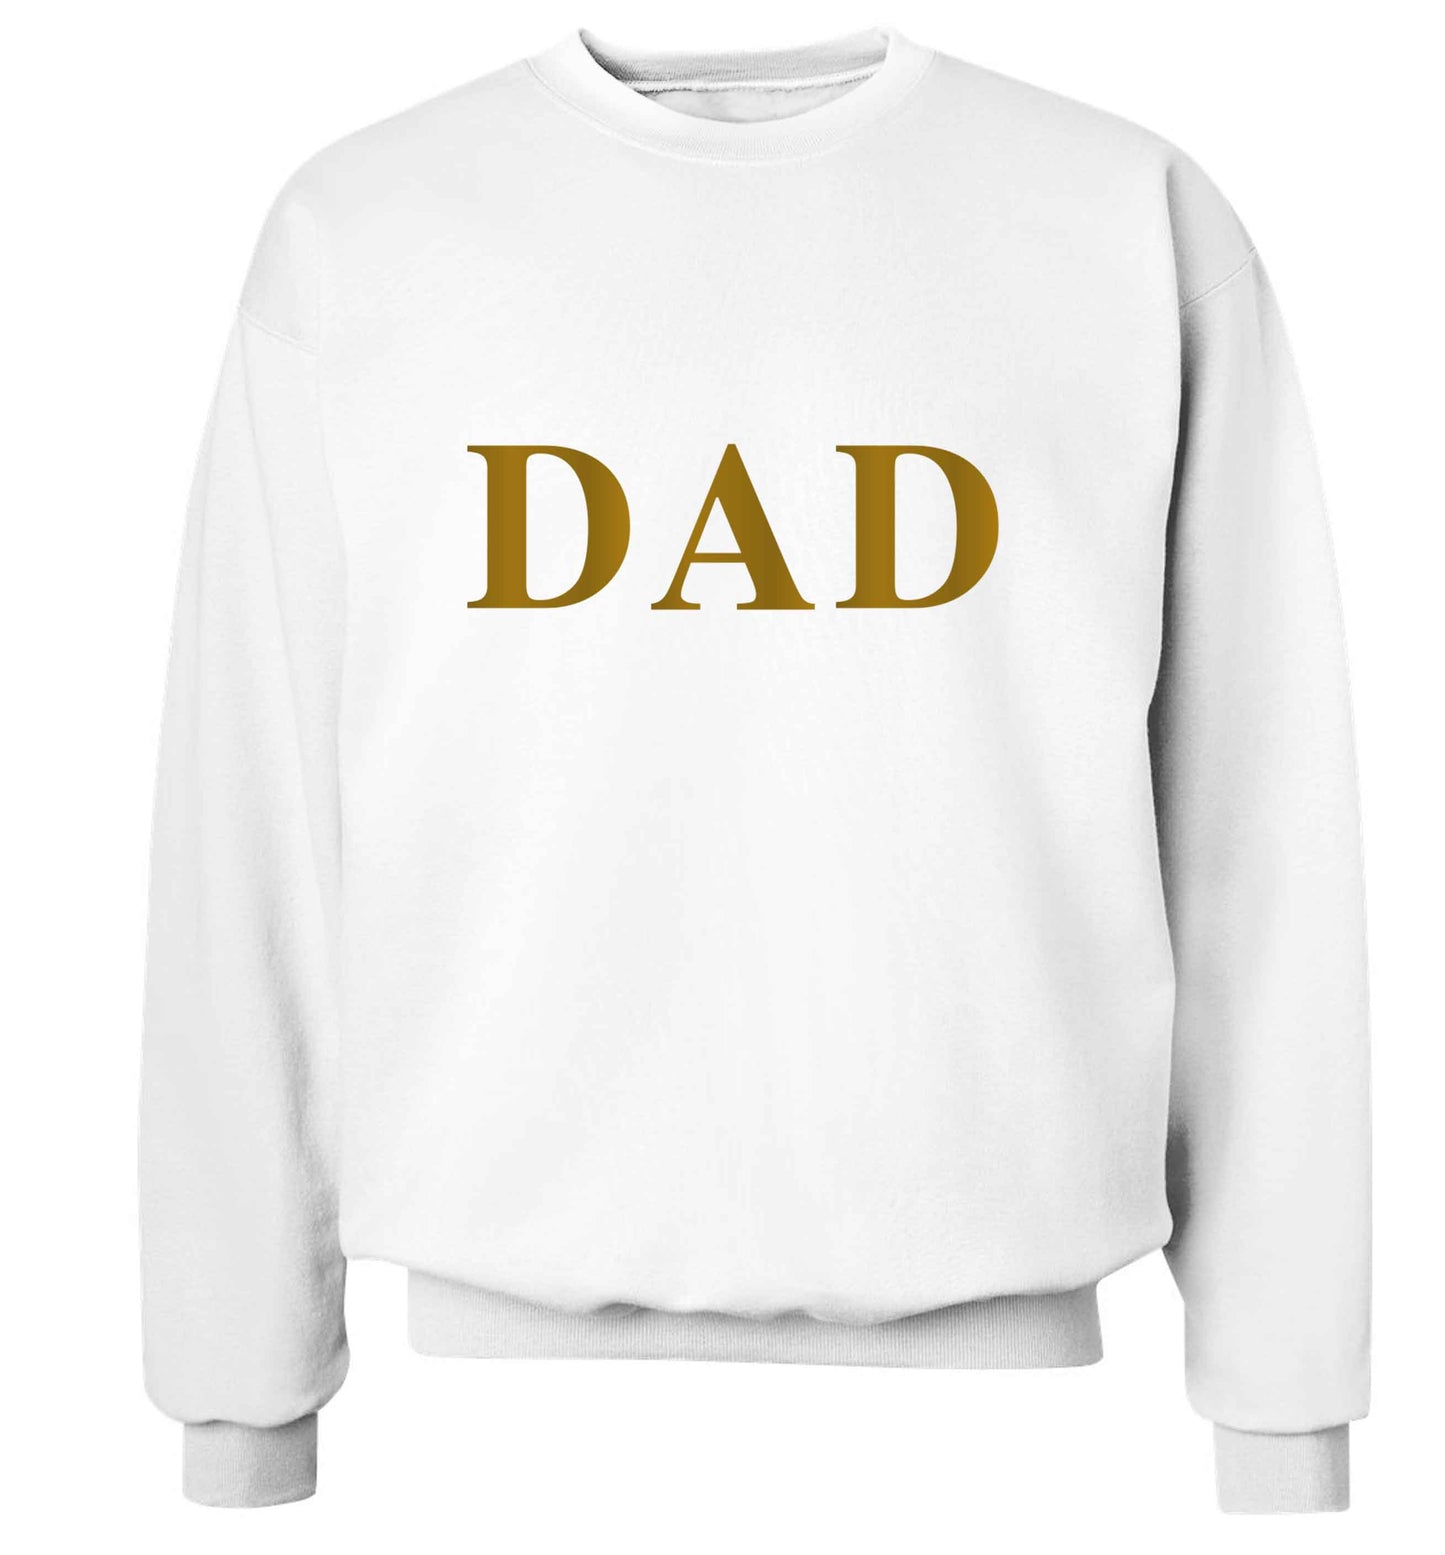 Dad adult's unisex white sweater 2XL